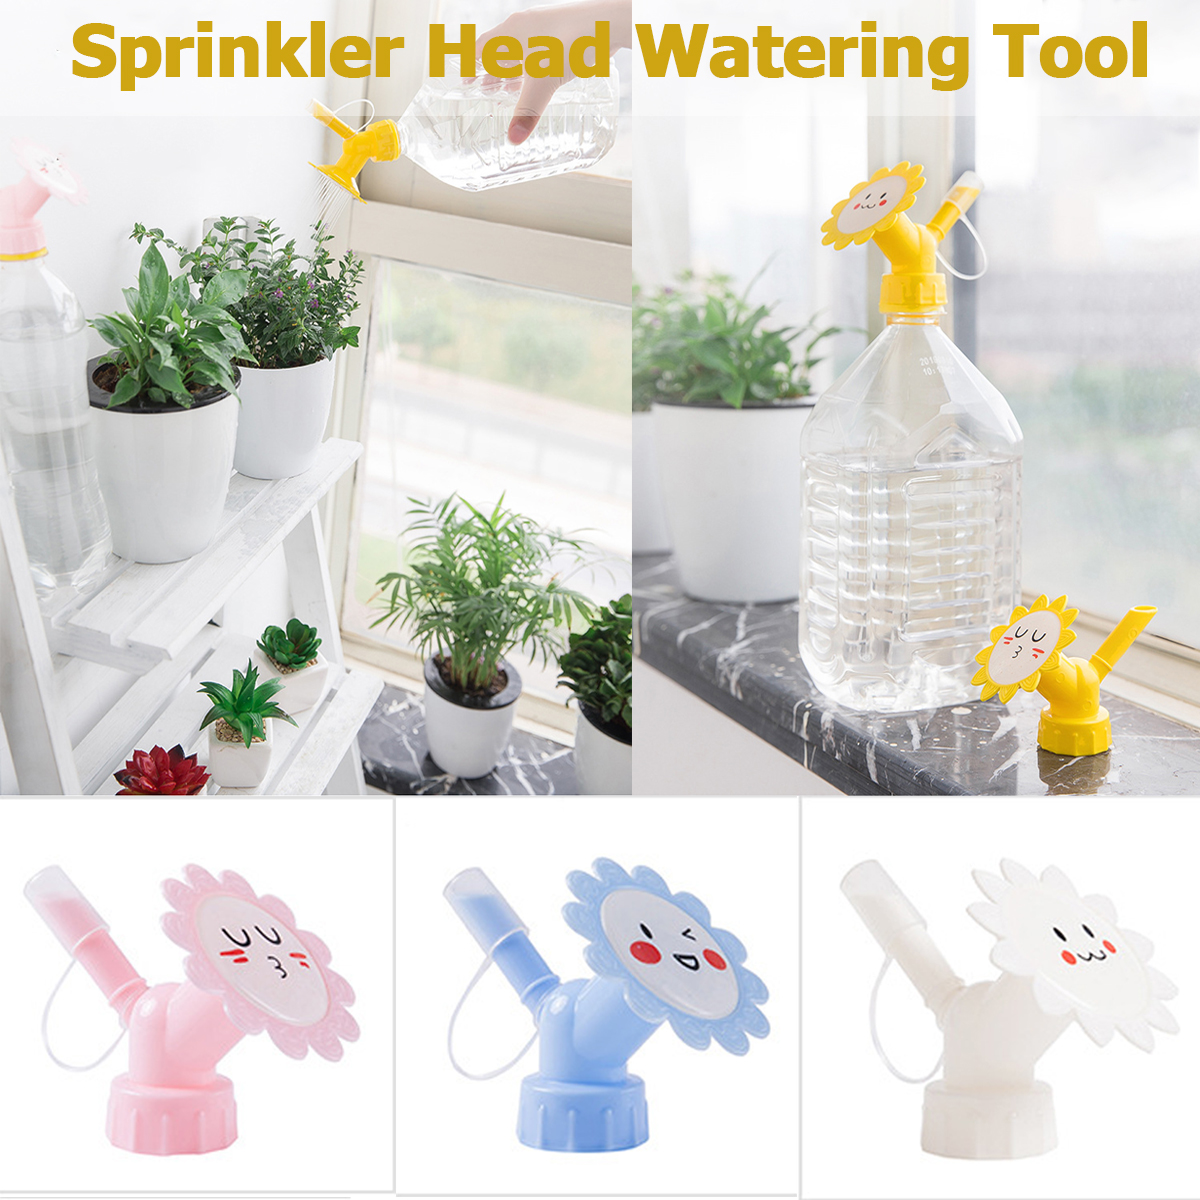 Irrigation-Tools-For-Family-Gardening-Watering-Sprinkler-Head-1706399